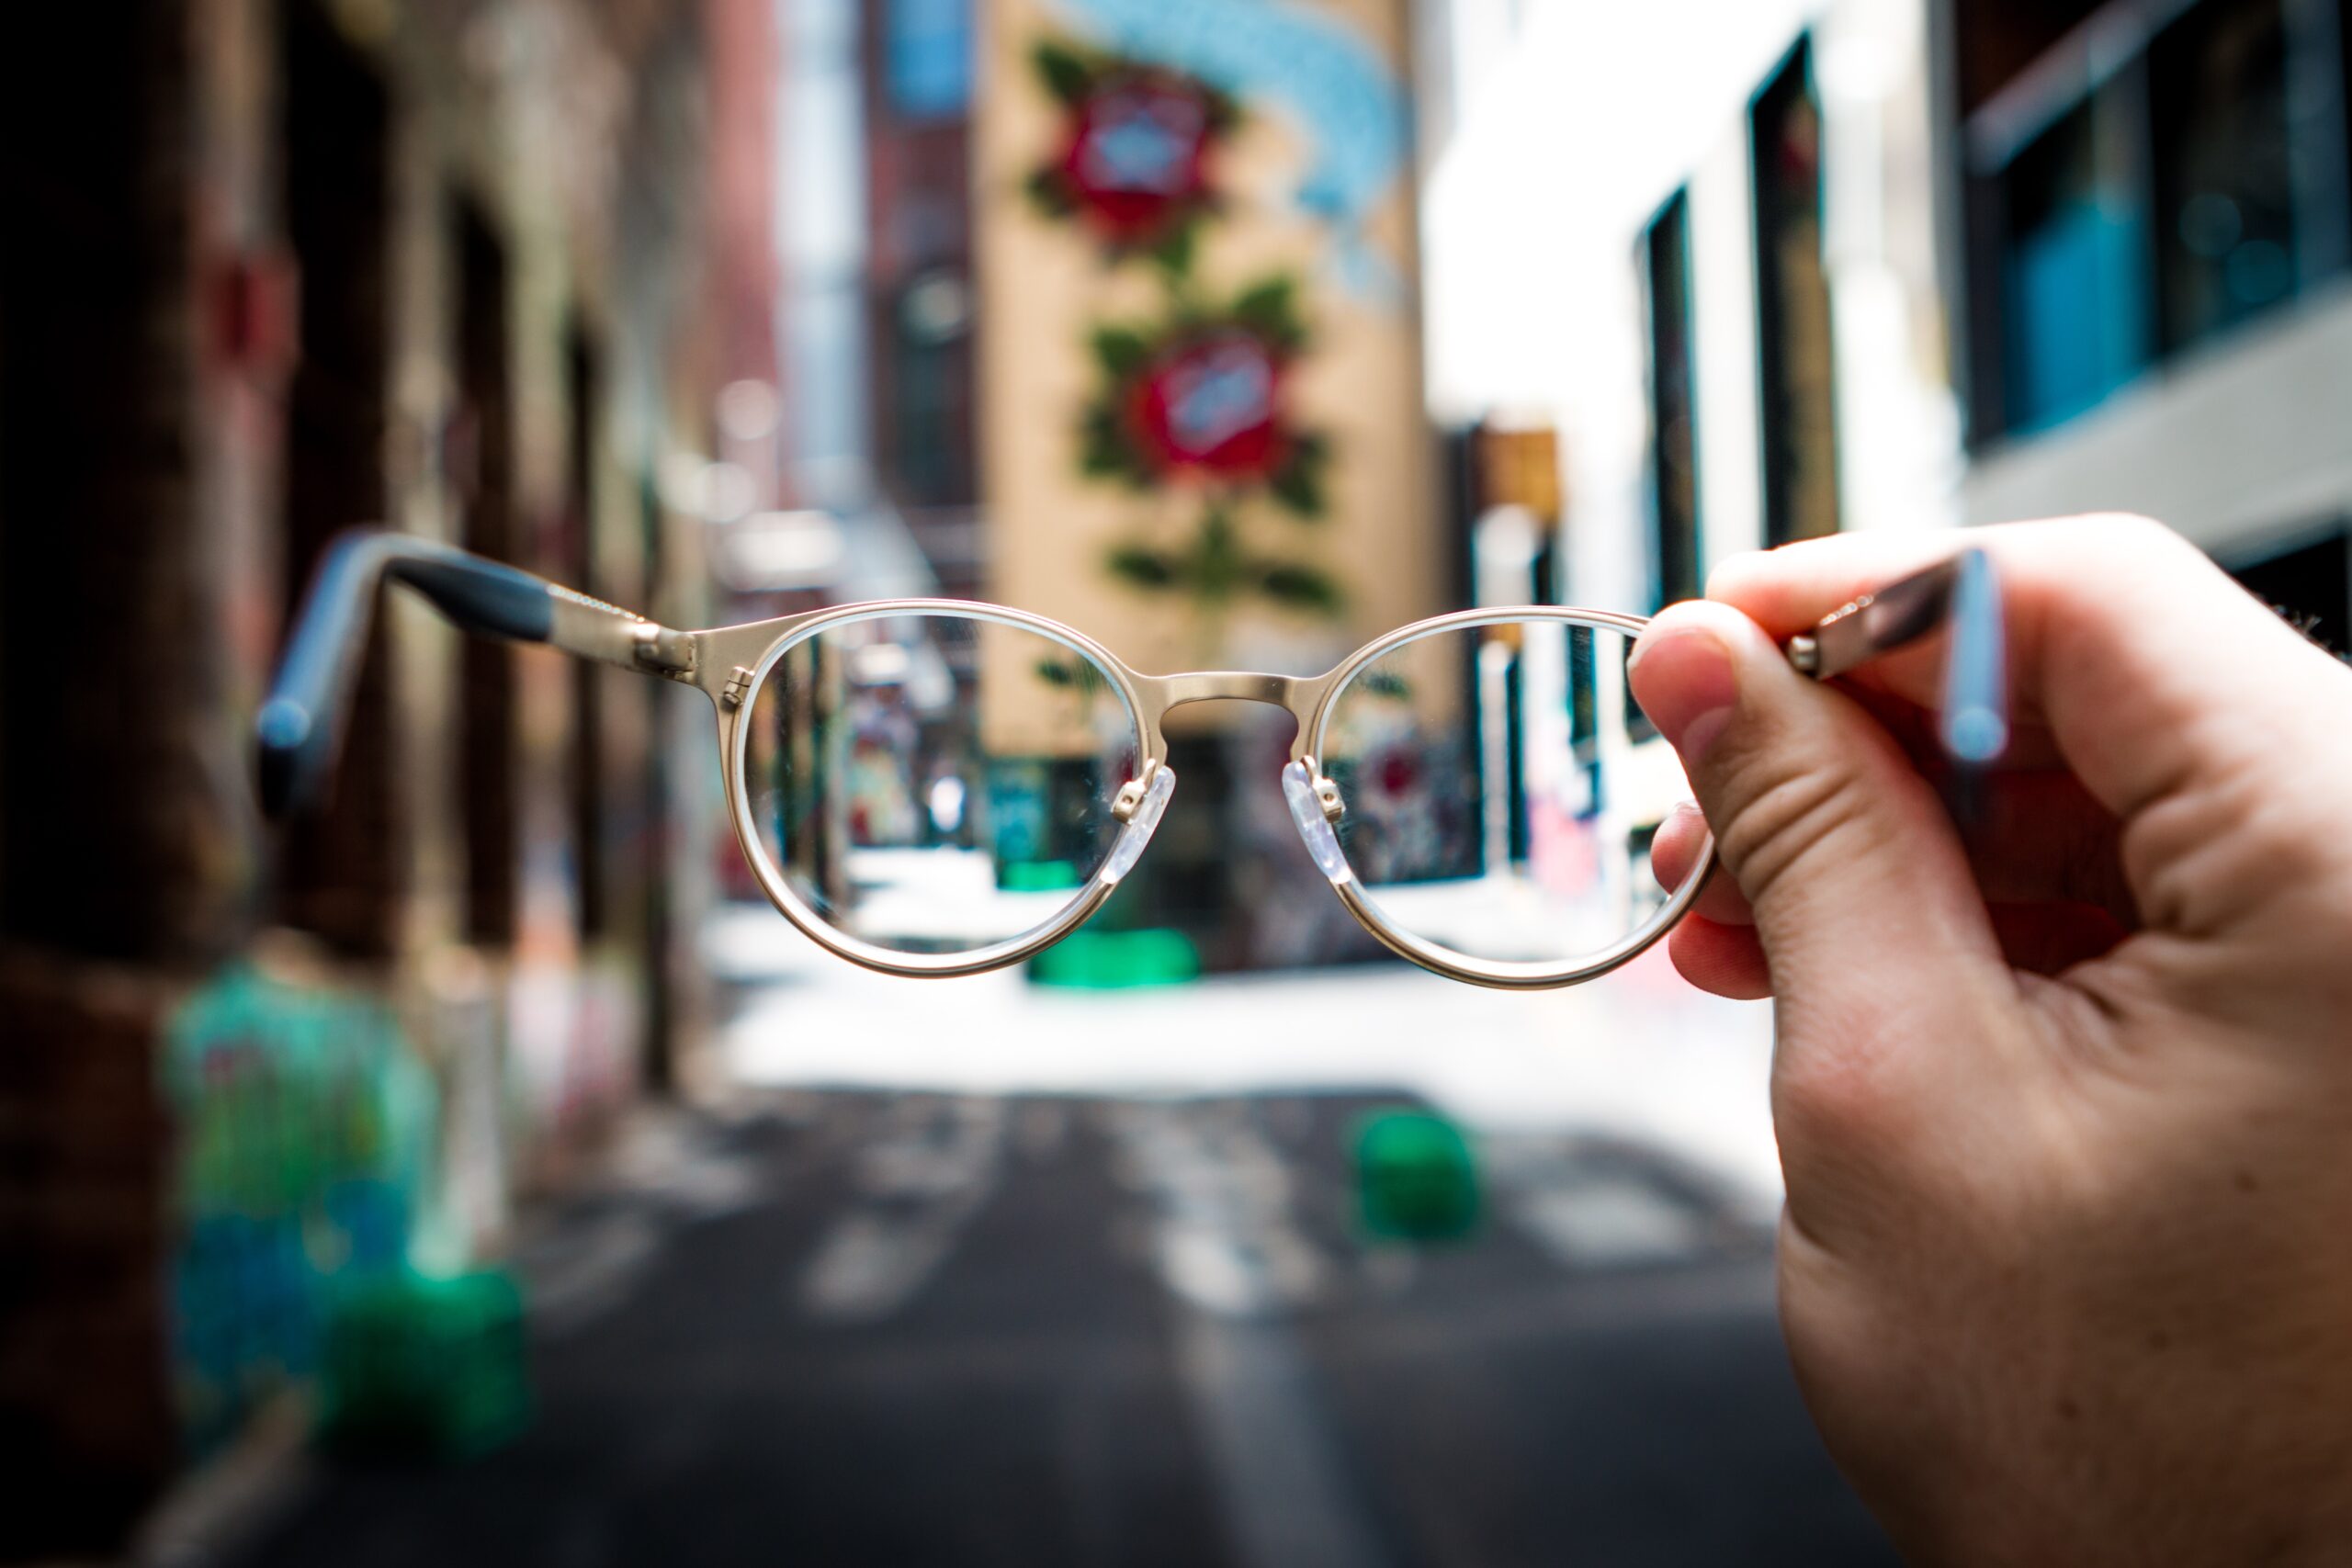 Image Of Hand Holding Eyeglasses Against Blurred Backdrop